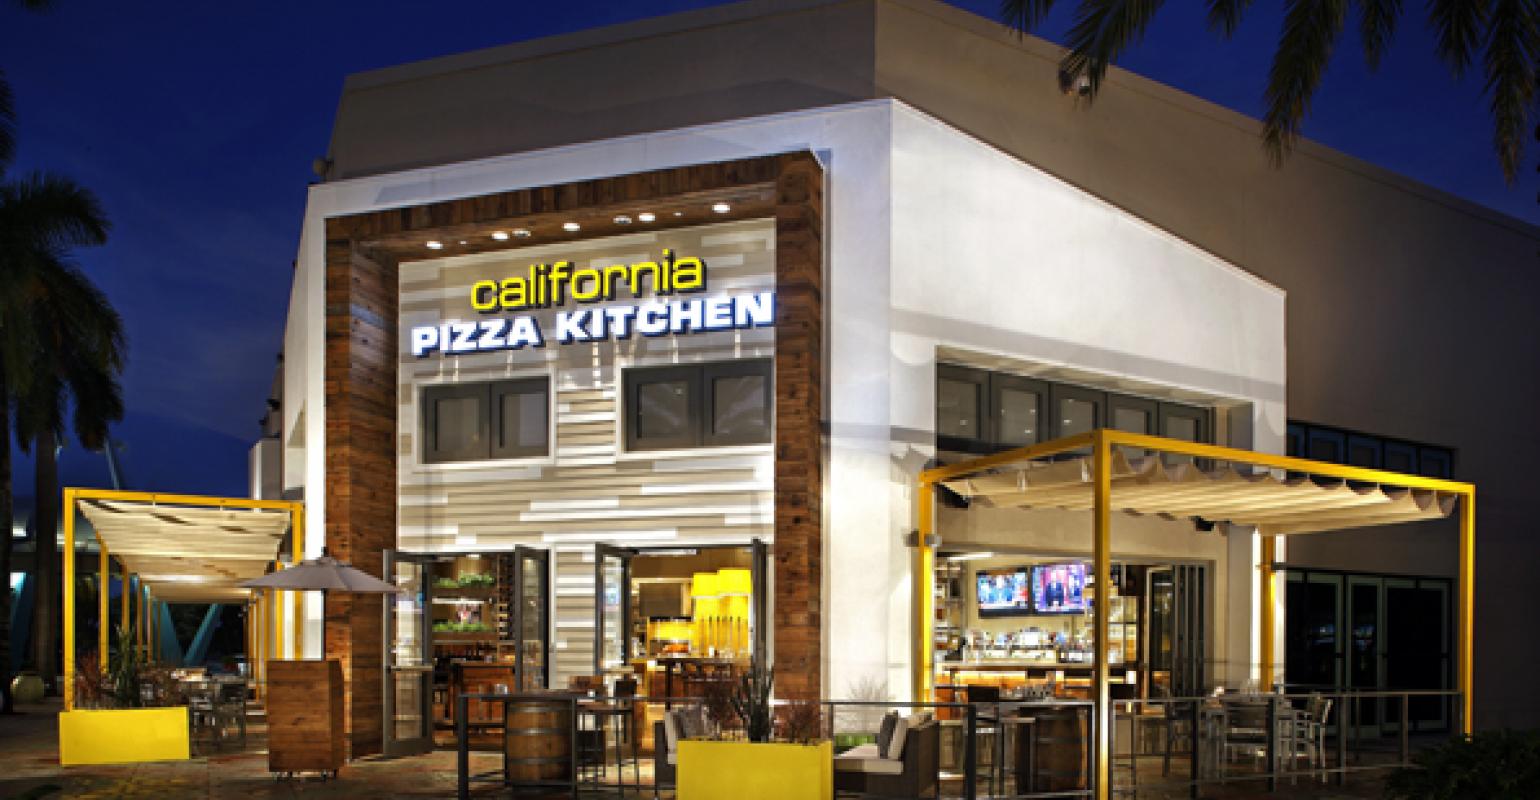 California Pizza Kitchen CEO G.J. Hart details improvement plans